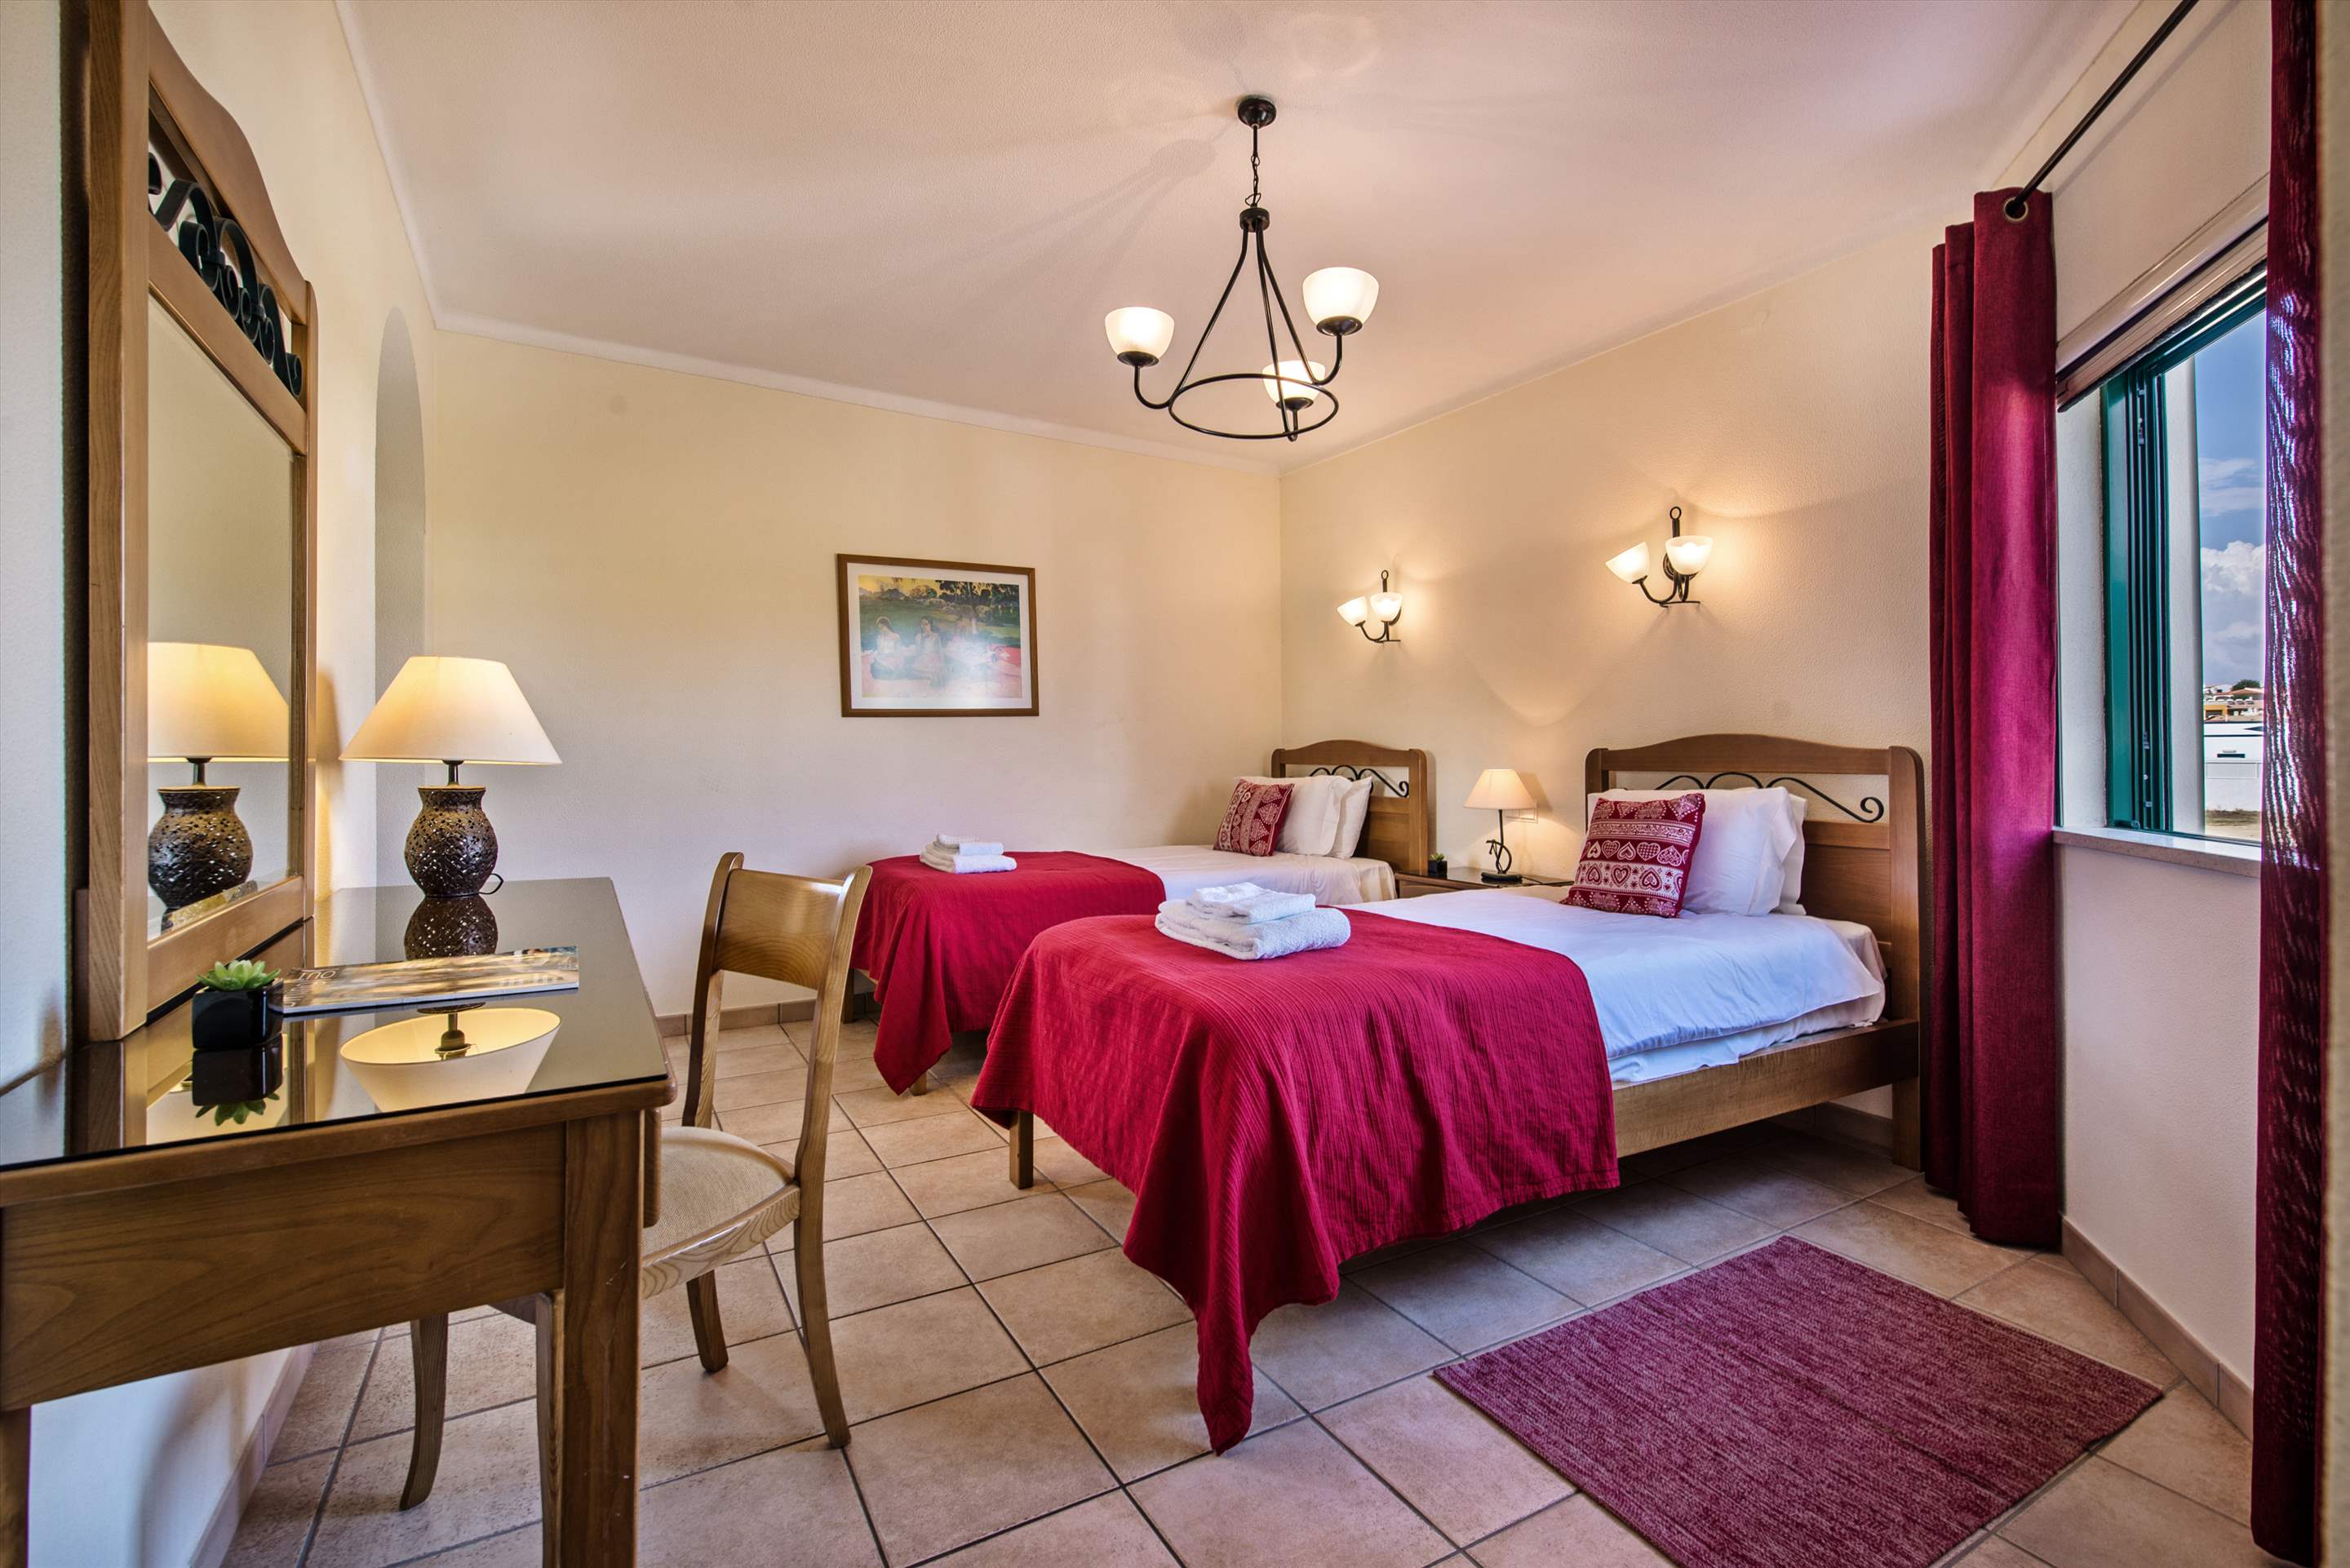 Casa Rebela, 10-11 persons rate, 6 bedroom villa in Gale, Vale da Parra and Guia, Algarve Photo #21